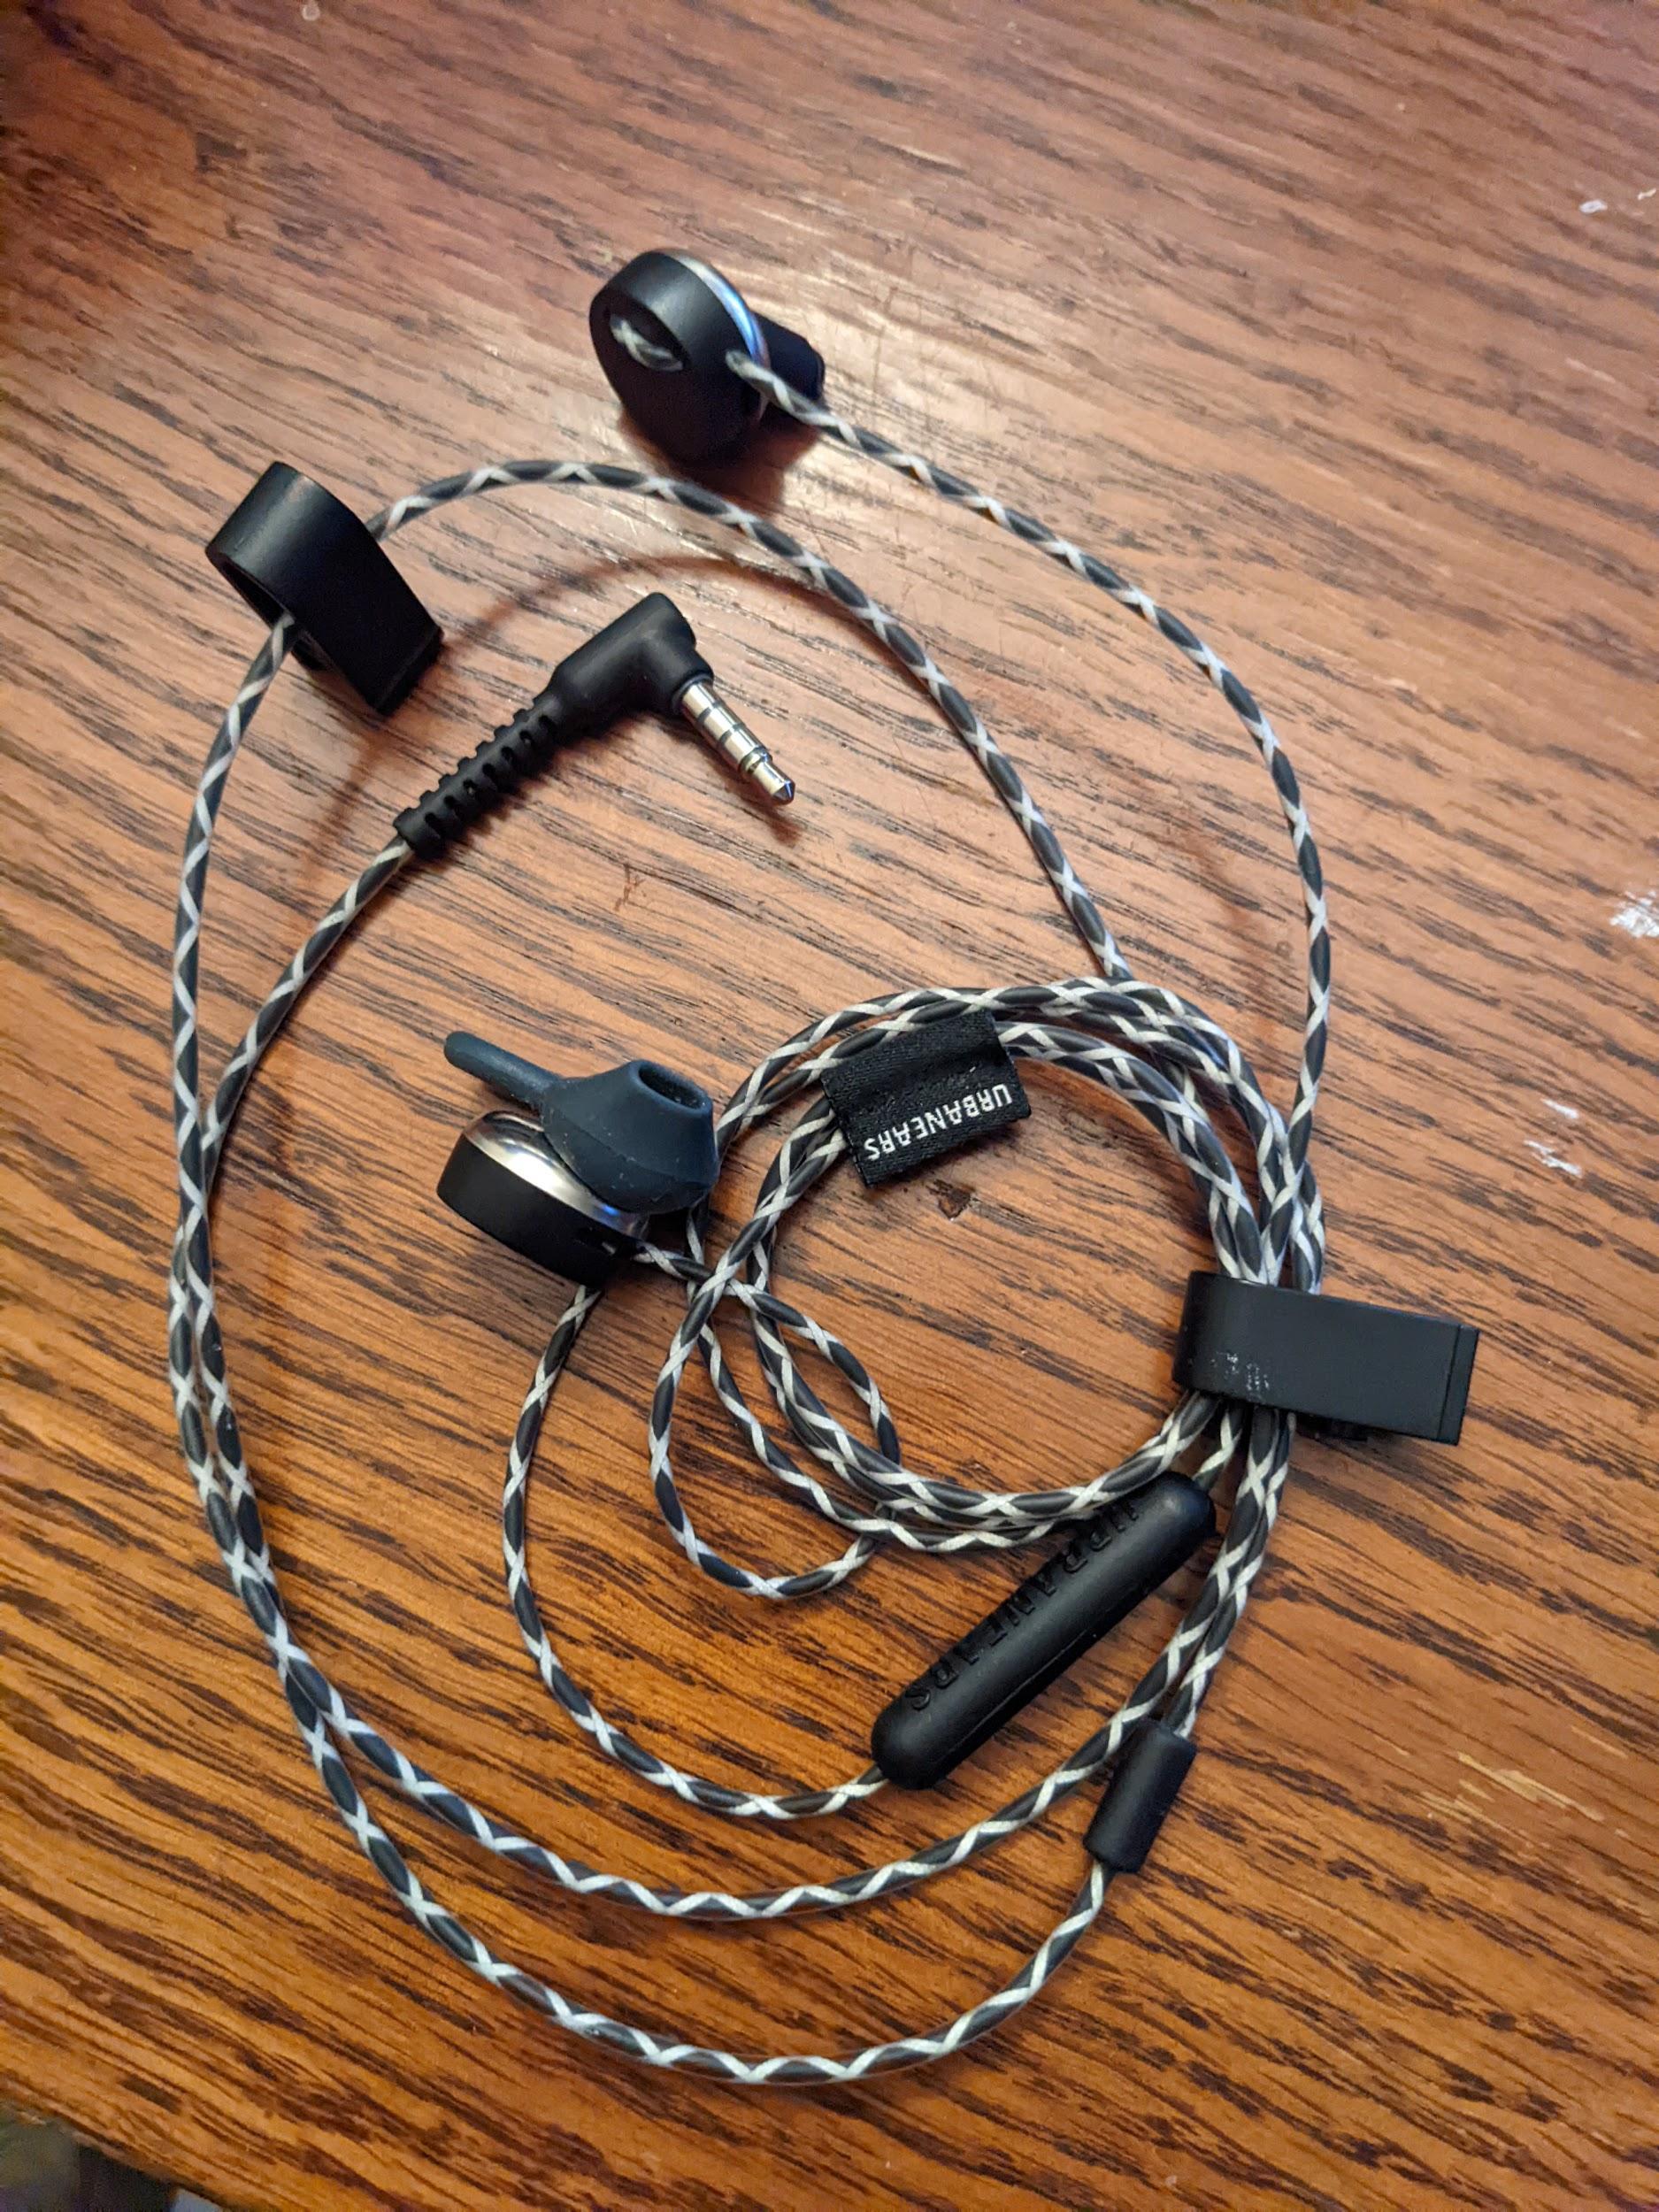 Example analog headset